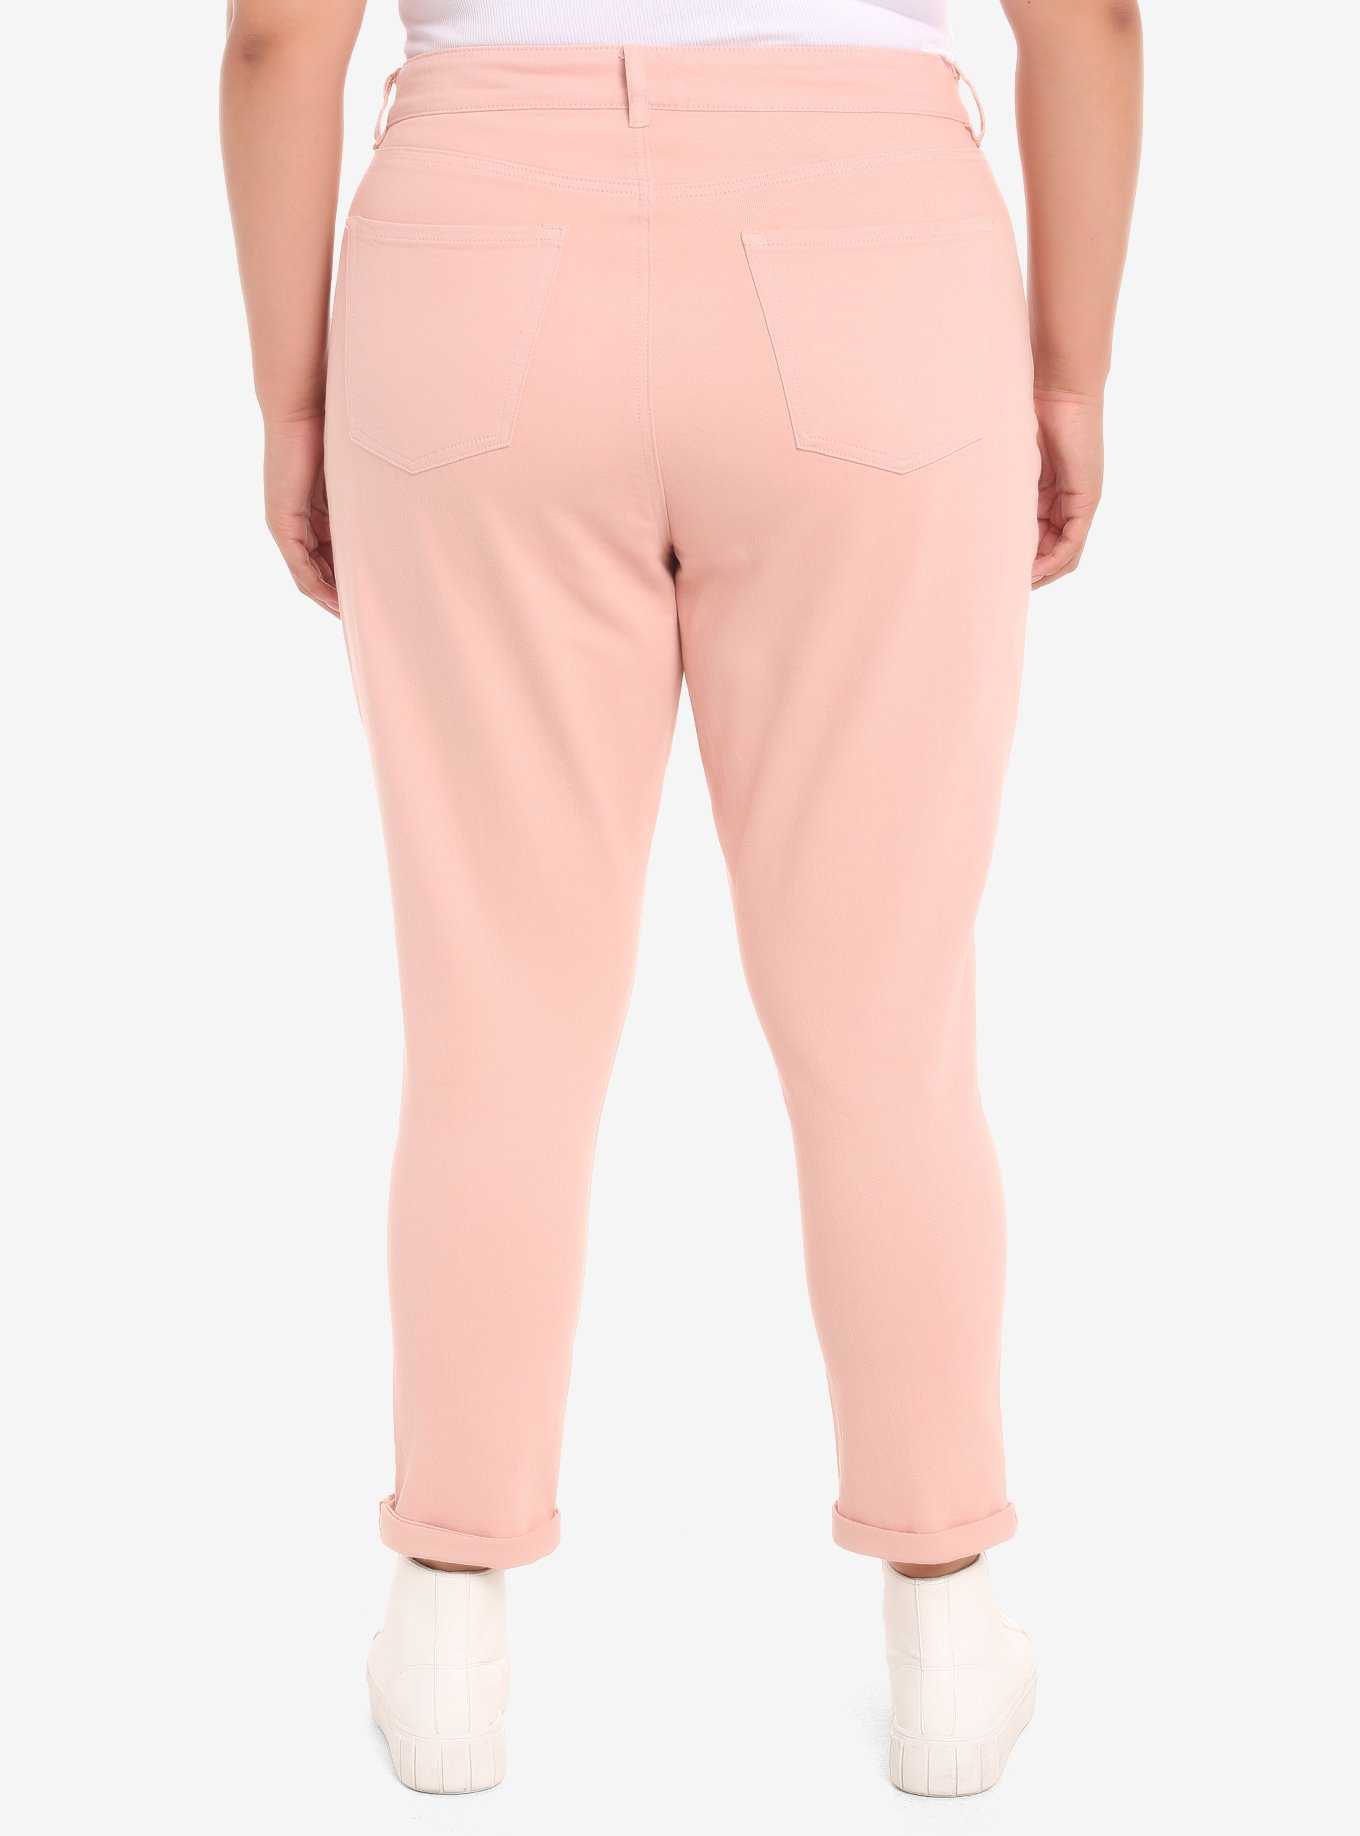 BT21 Pink Sweetie Mom Jeans Plus Size, , hi-res